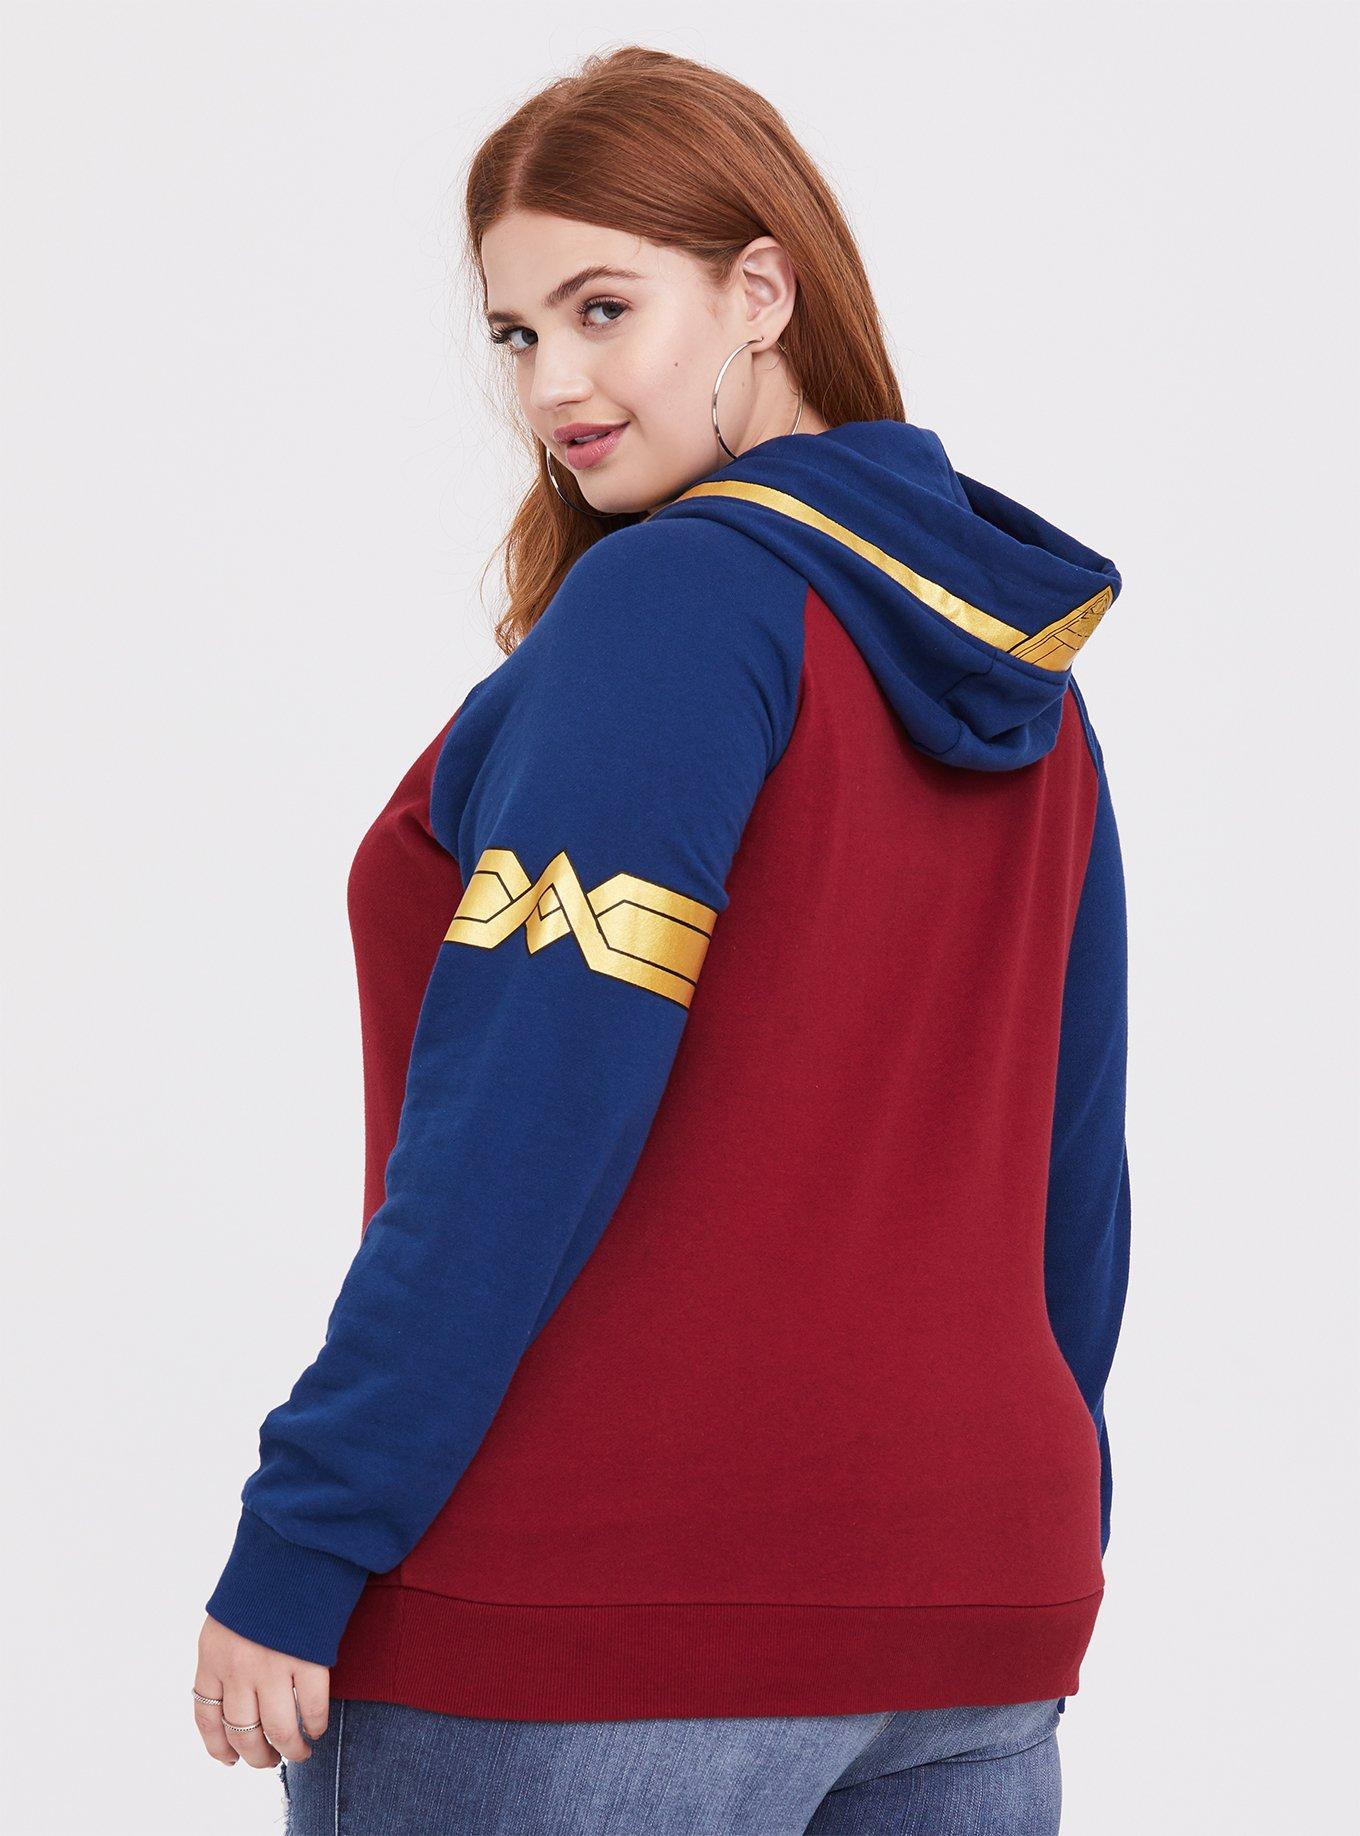 Wonder woman DC Comics Juniors Red Costume Hoodie Jacket Sweatshirt